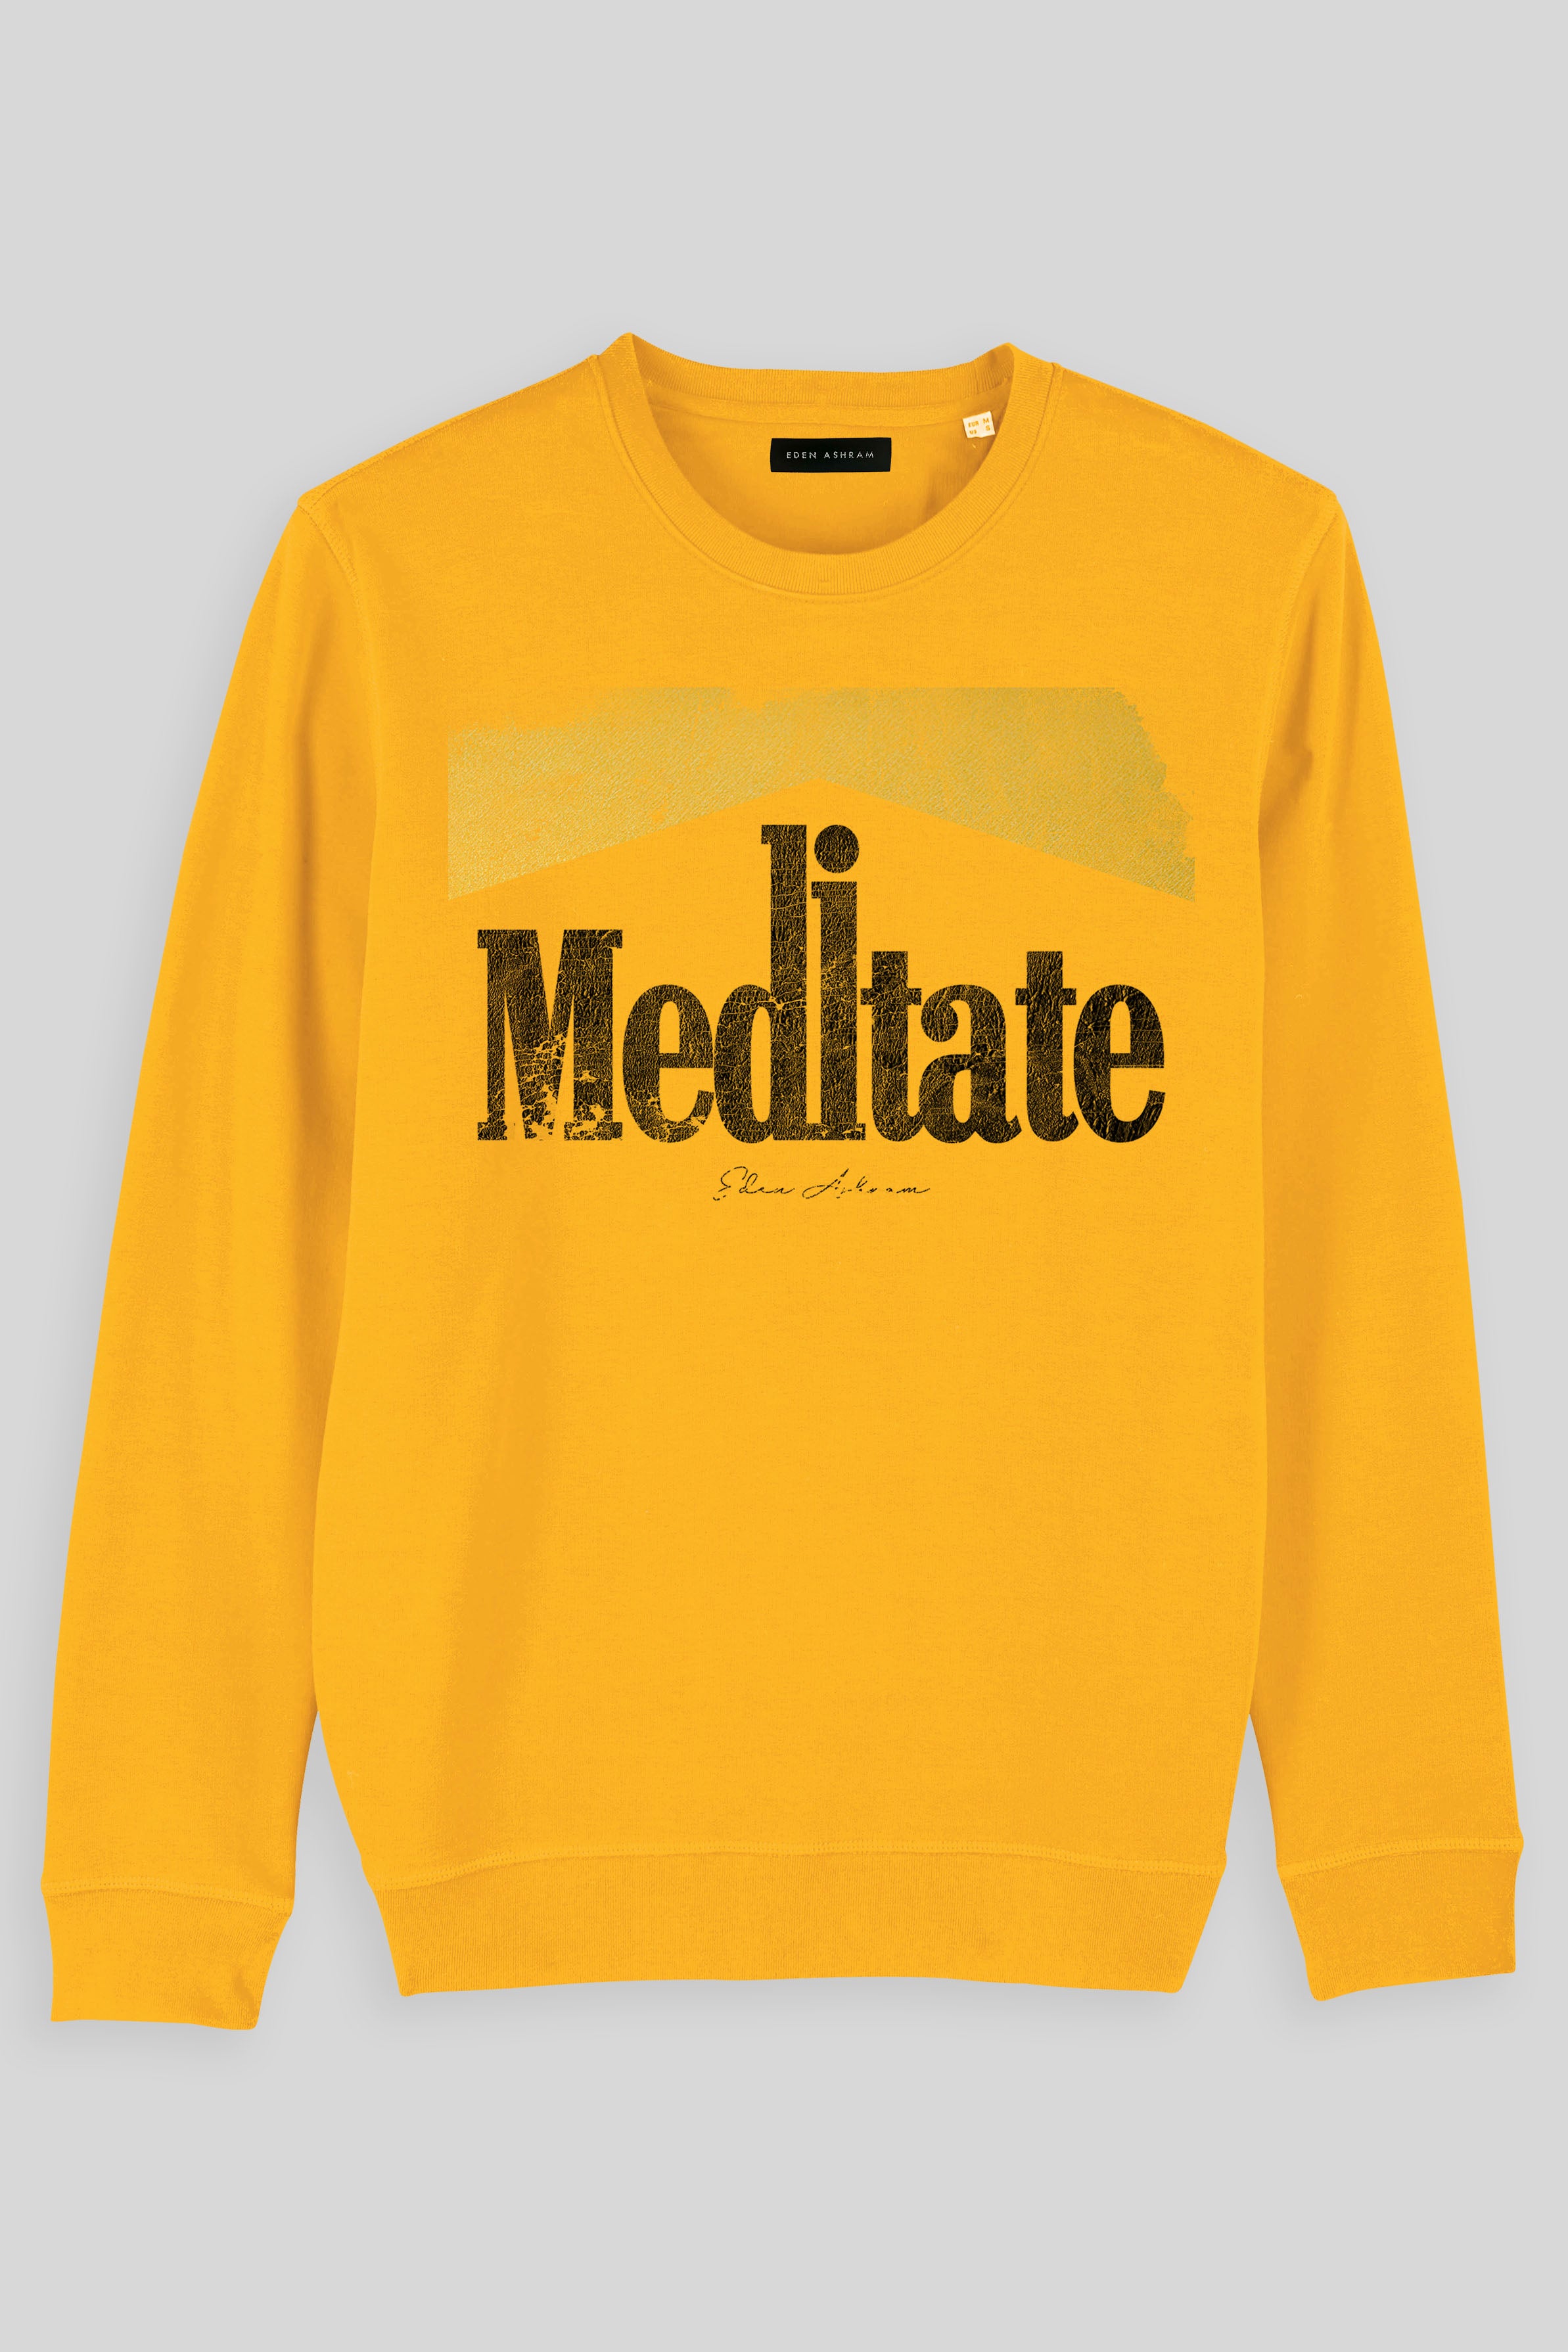 Eden Ashram Meditate 2.0 Premium Crew Neck Sweatshirt Spectra Yellow | Gold